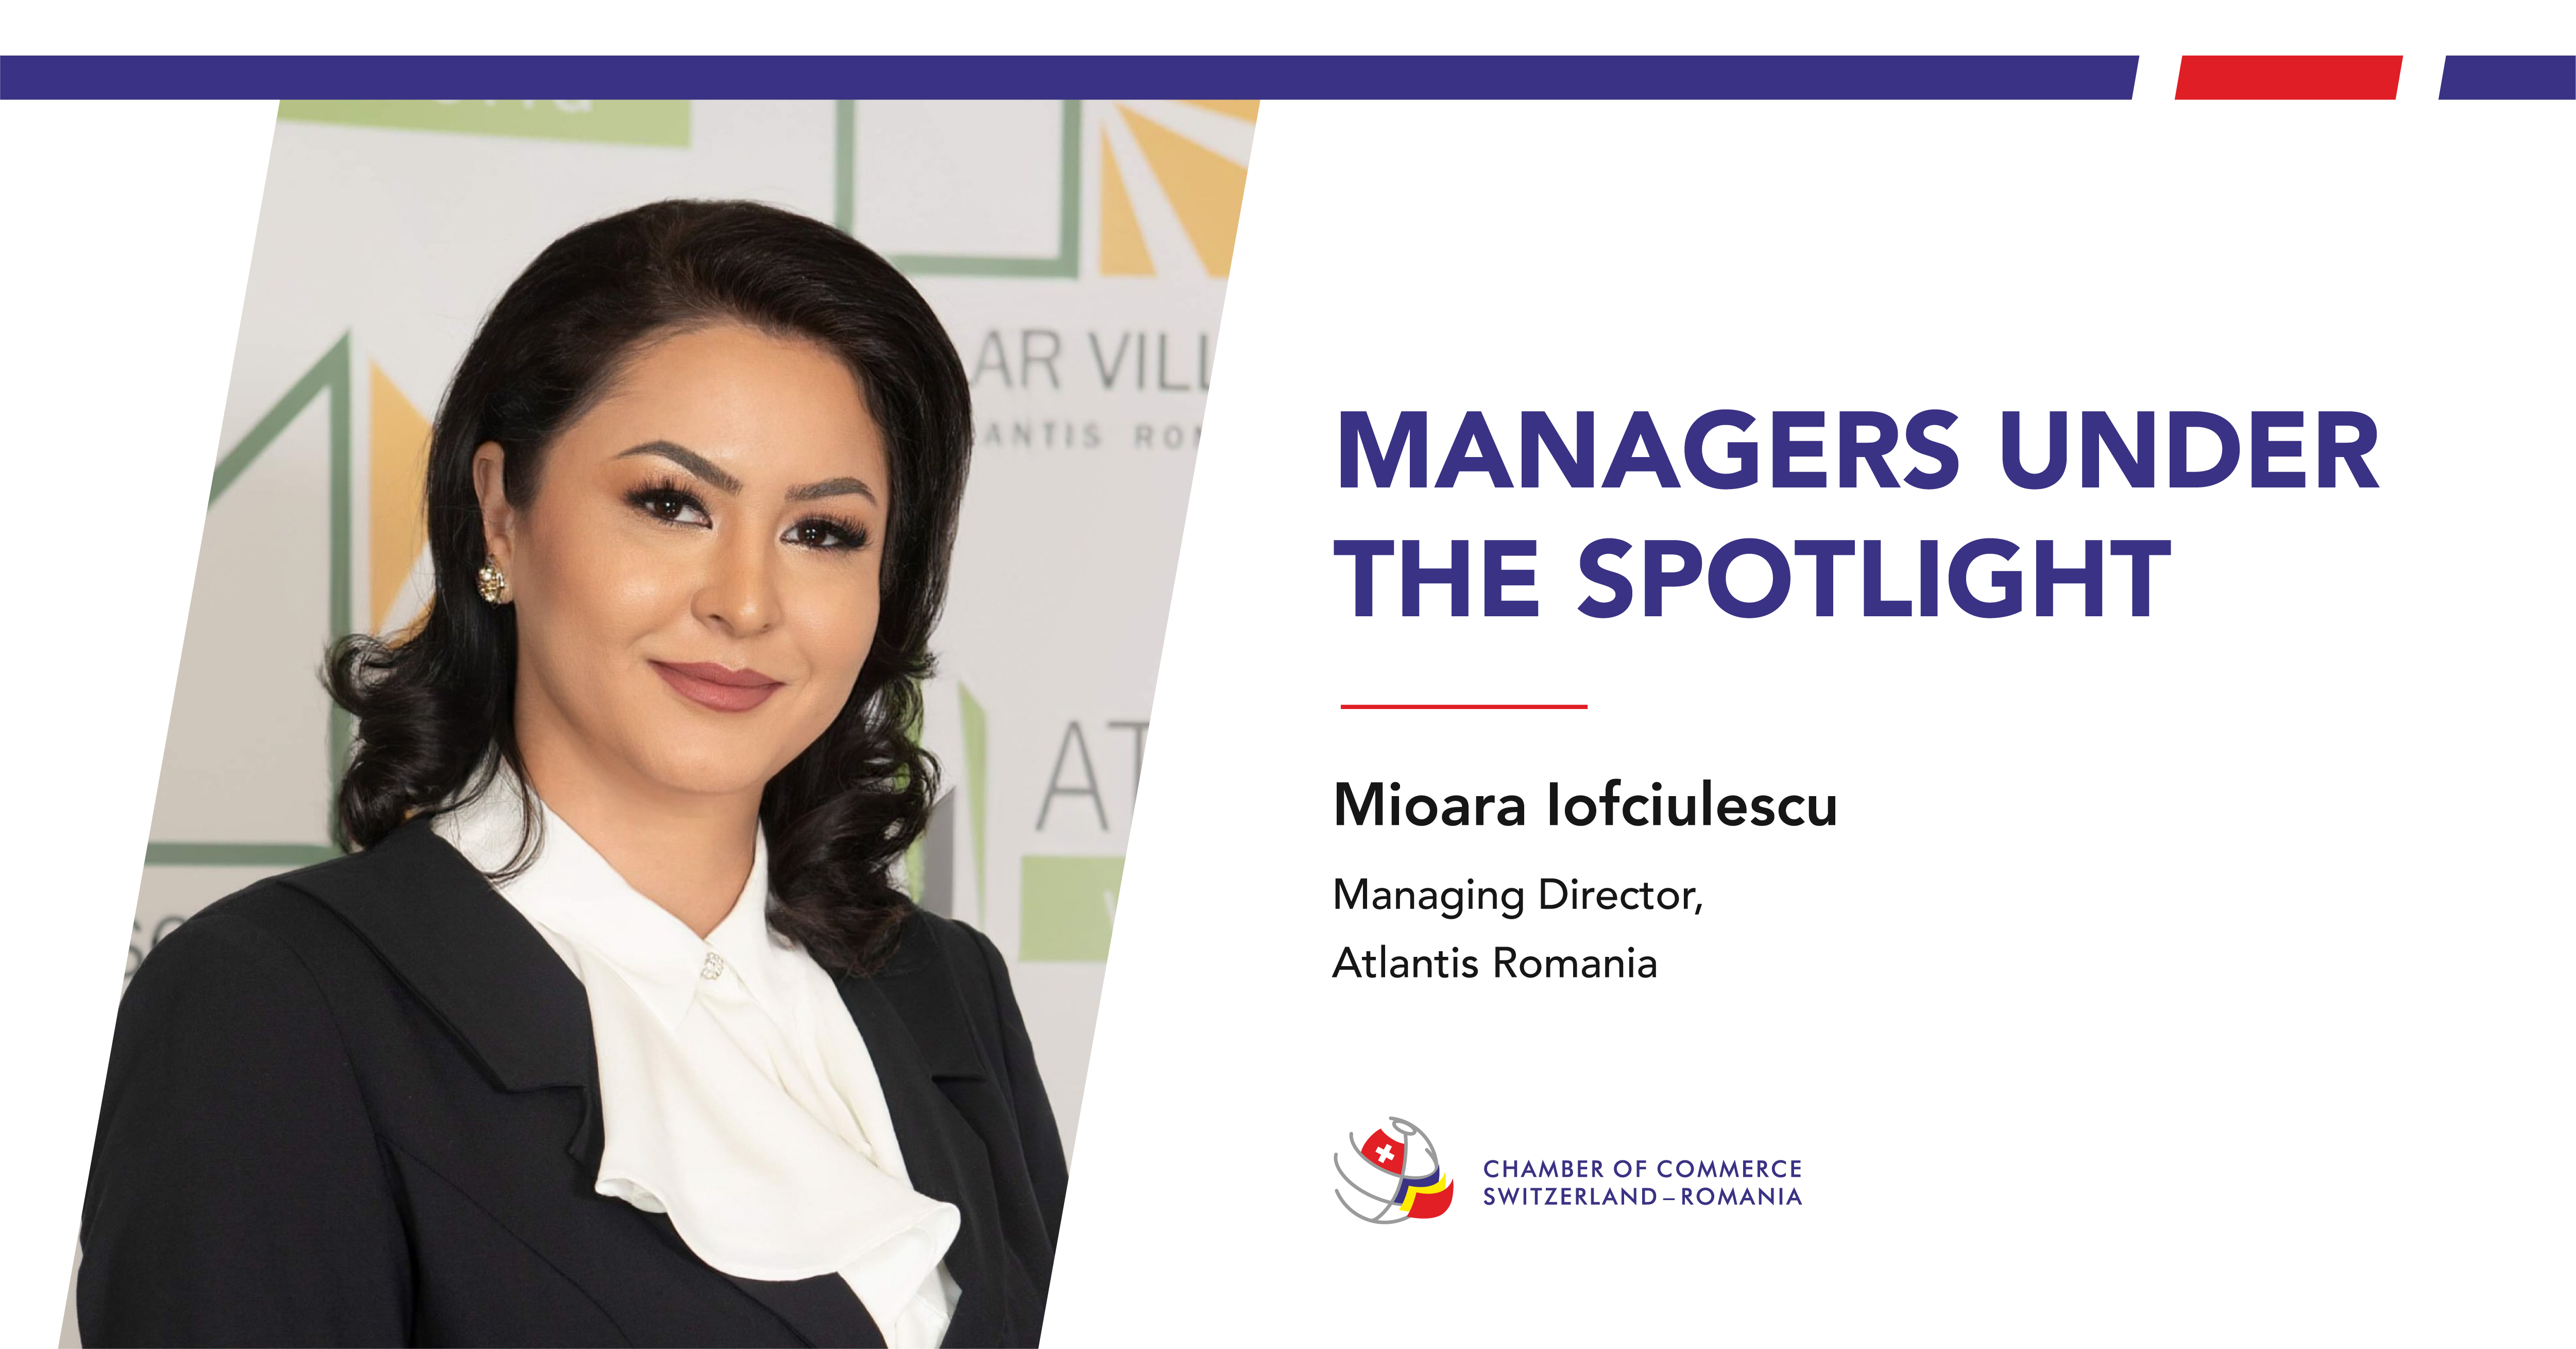 Managers under the spotlight - Mioara Iofciulescu, Managing Director, Atlantis Romania